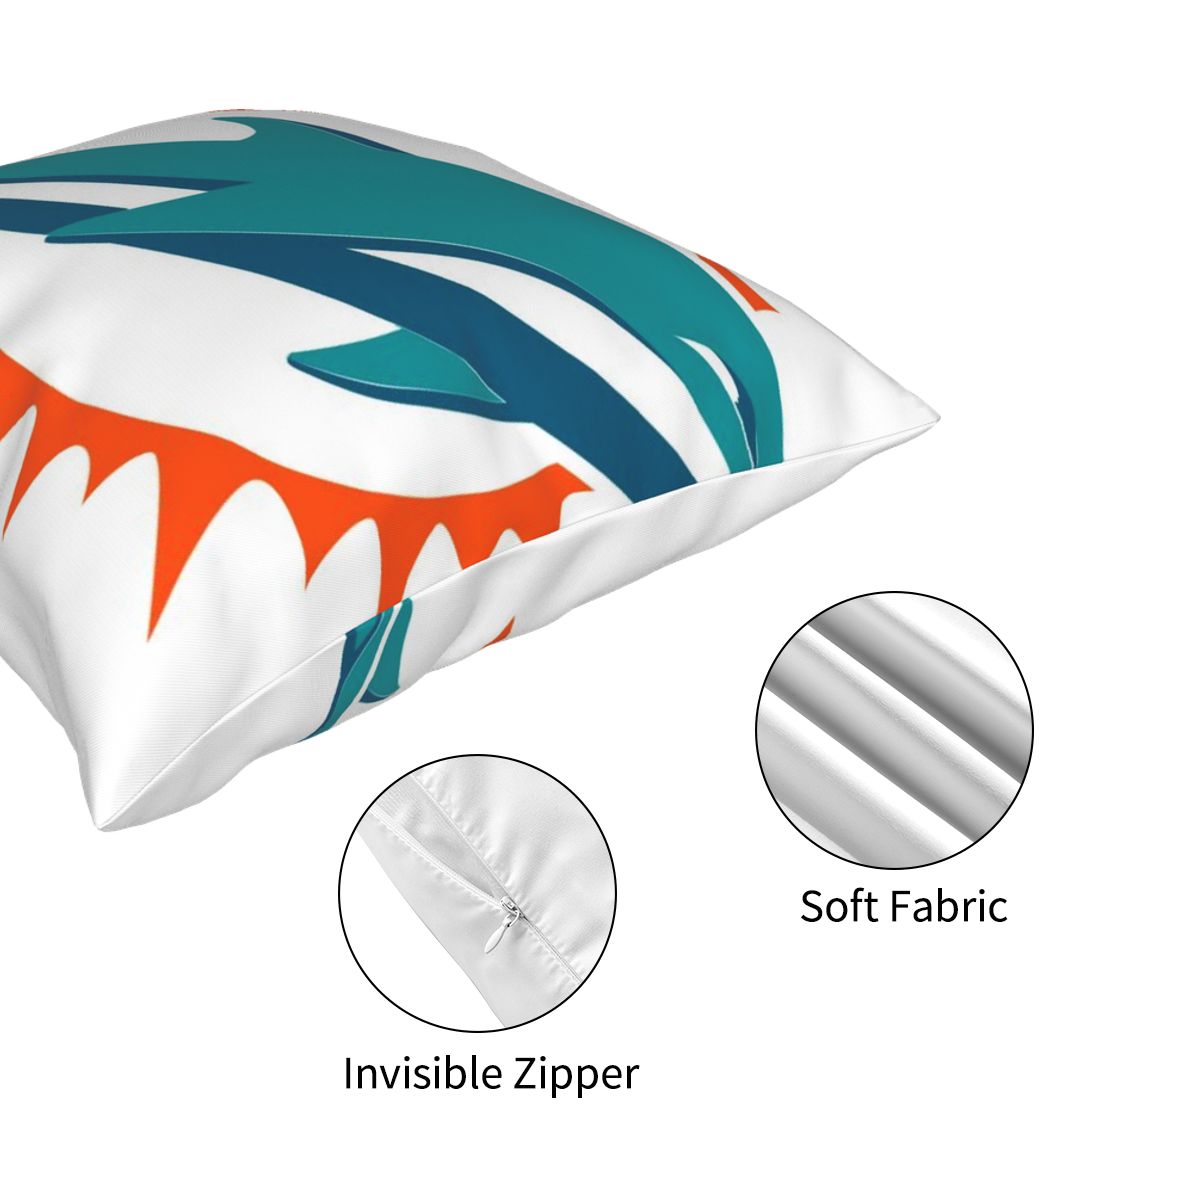 Custom Decorative Football Pillow Case Miami Dolphins White Pillowcase Personalized Throw Pillow Covers